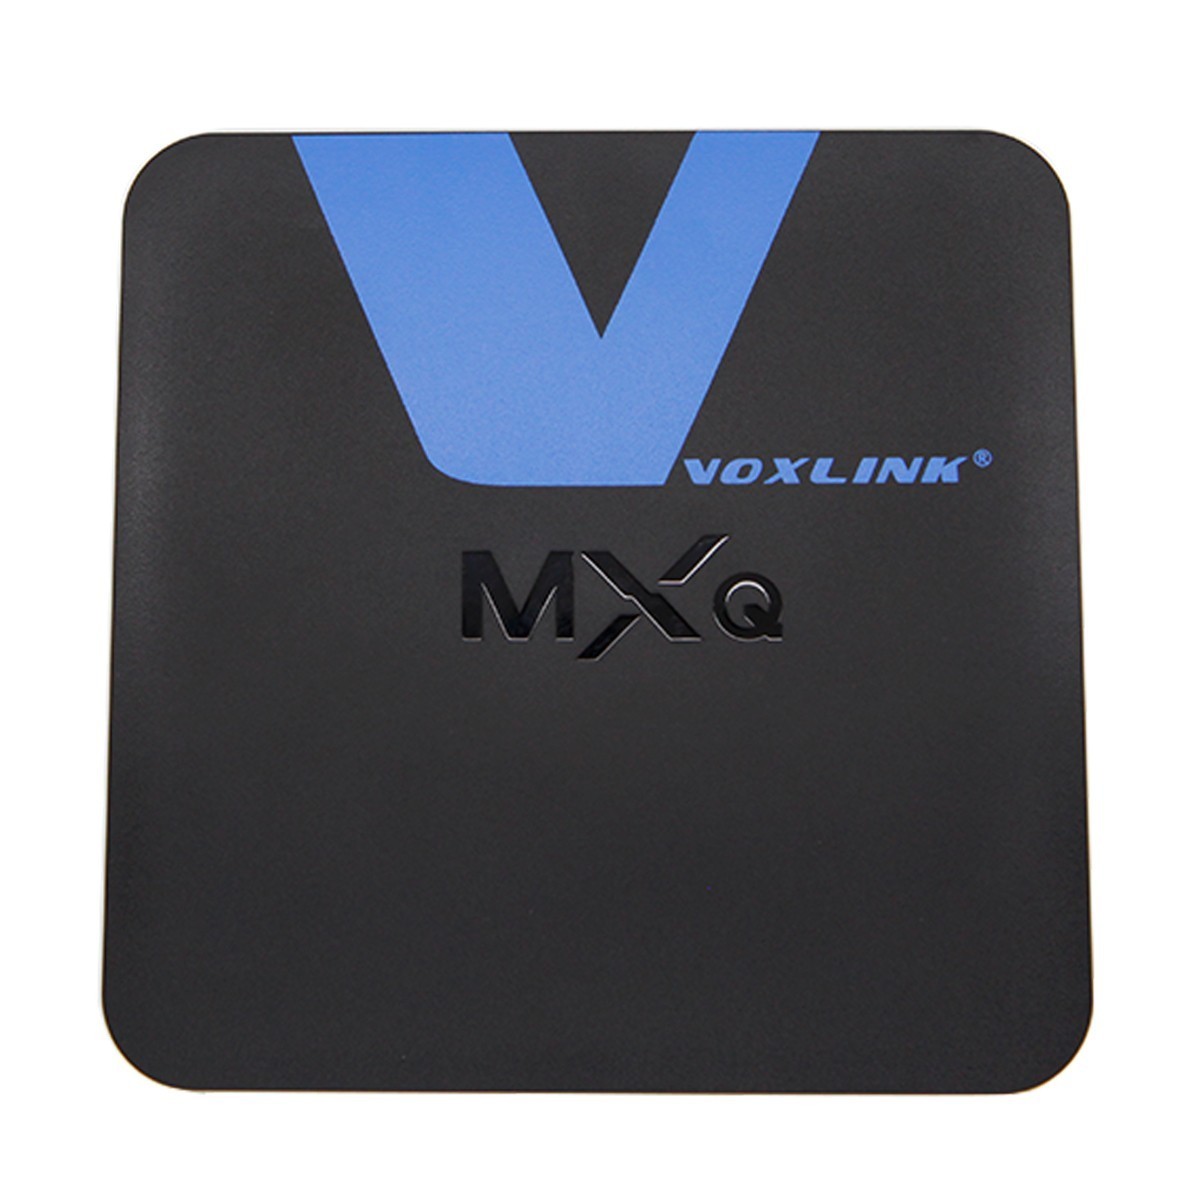 Voxlink Original Android TV BOX MX Amlogic S805 1GB/8GB Quad Core IPTV Android 4.4 TV Set top box support MP3/AAC/WMA/RM/FLAC RU